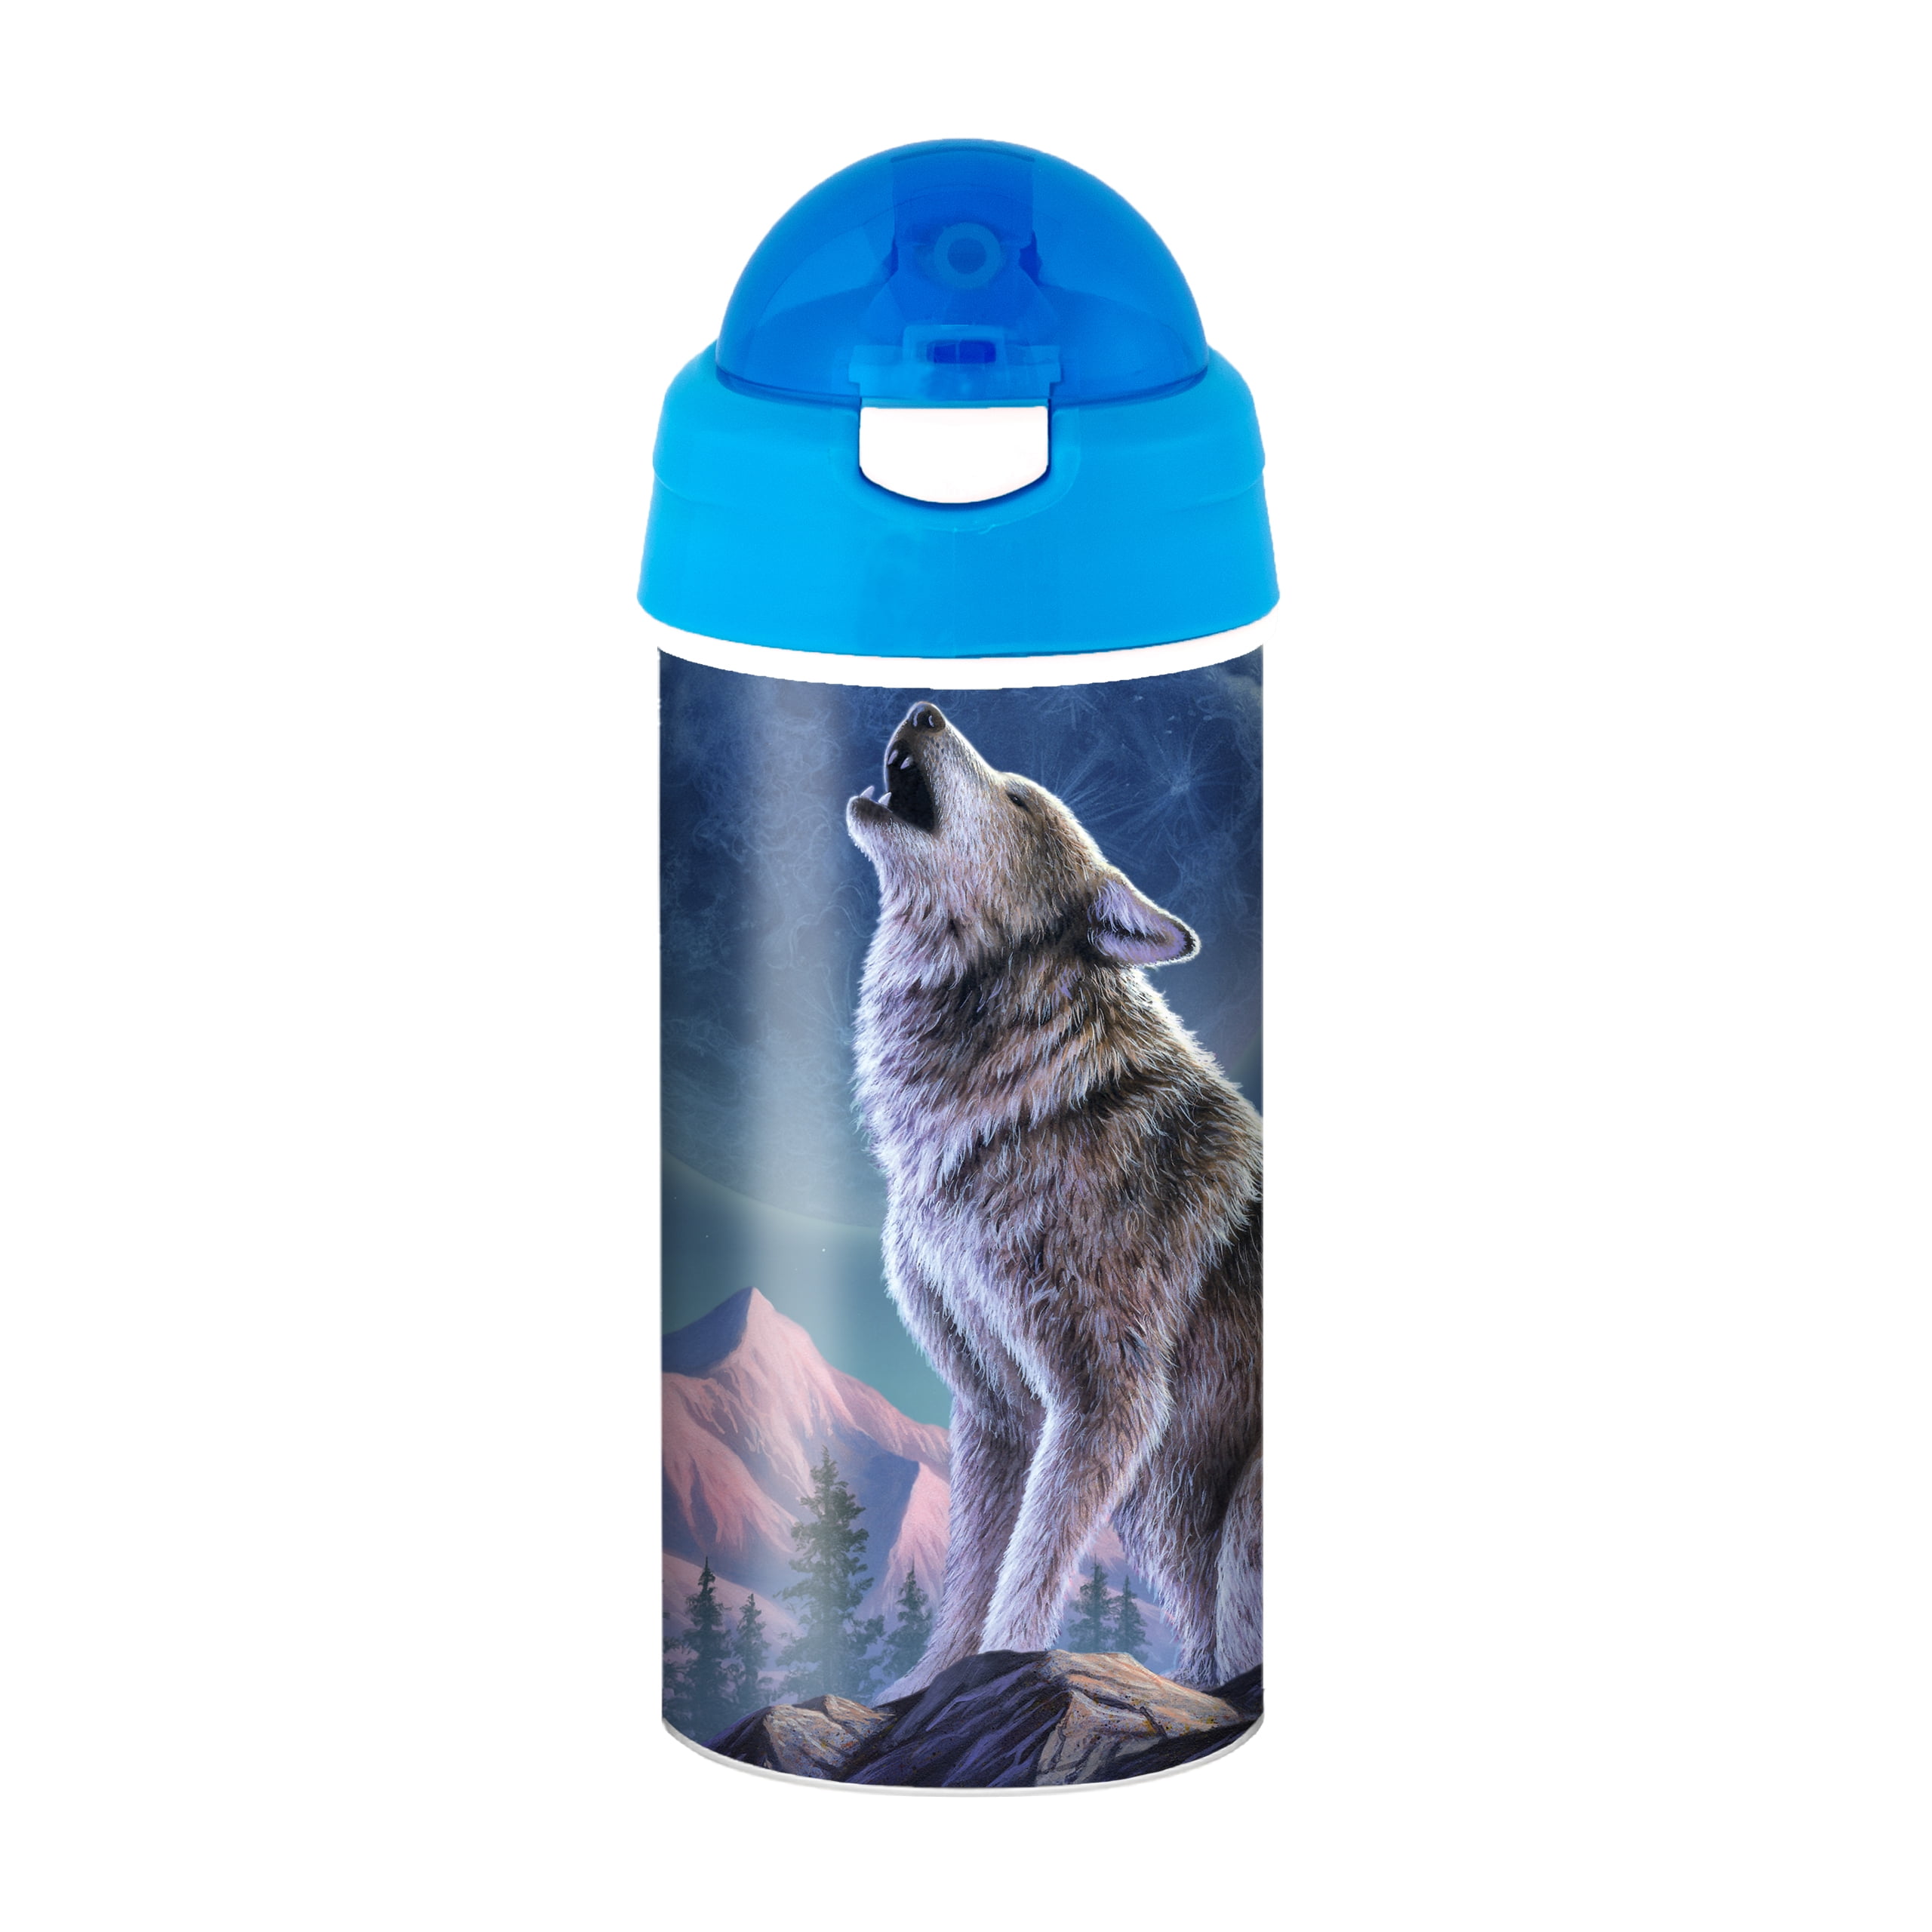 Afwezigheid Toelating Milieuactivist 3D LiveLife Drinking Bottle - Moonlight Sonata from Deluxebase. 3D  Lenticular Wolf Water Bottle with Straw. 20oz kids water bottle with  original artwork from renowned artist, Jerry LoFaro - Walmart.com